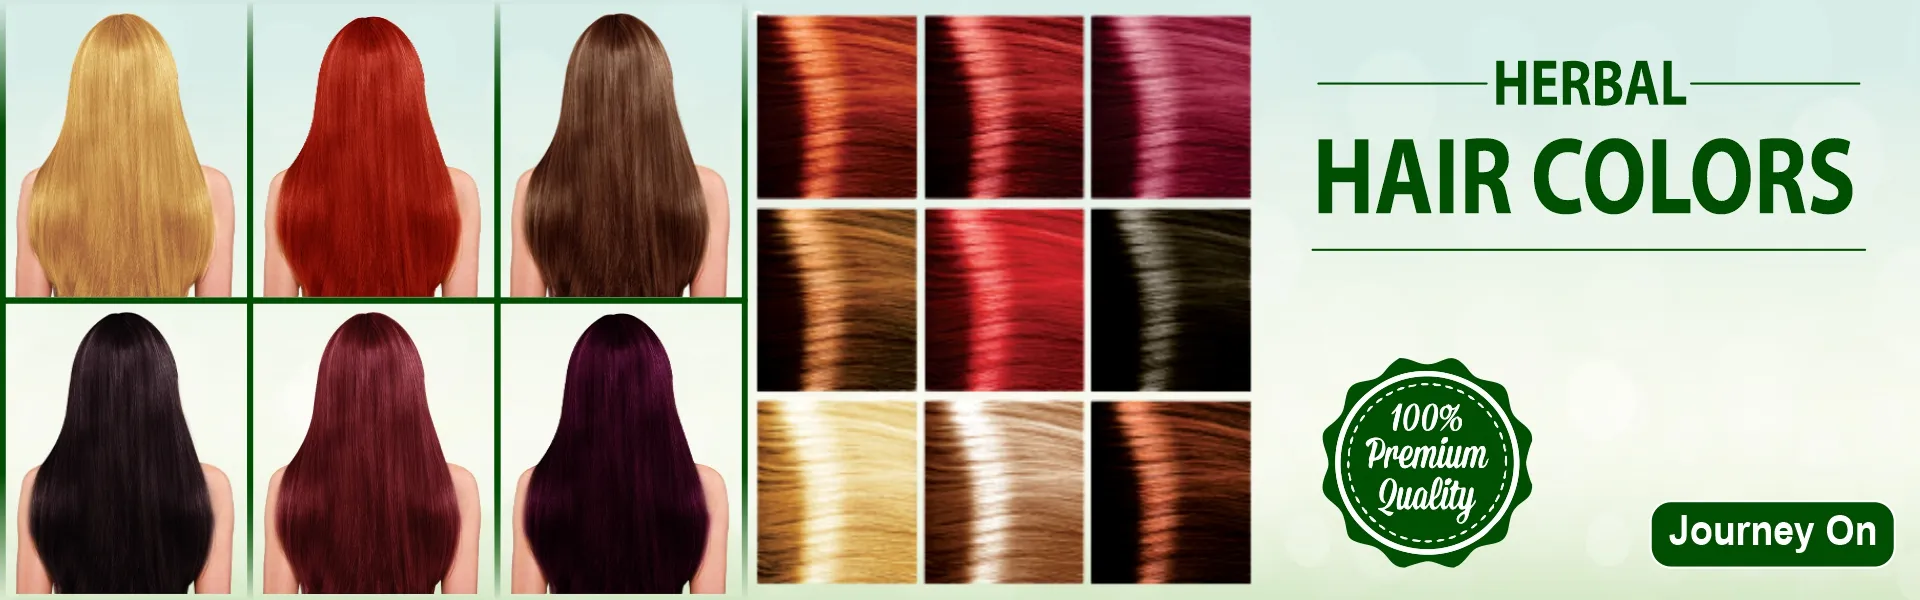 hair colors banner - www.dkihenna.com